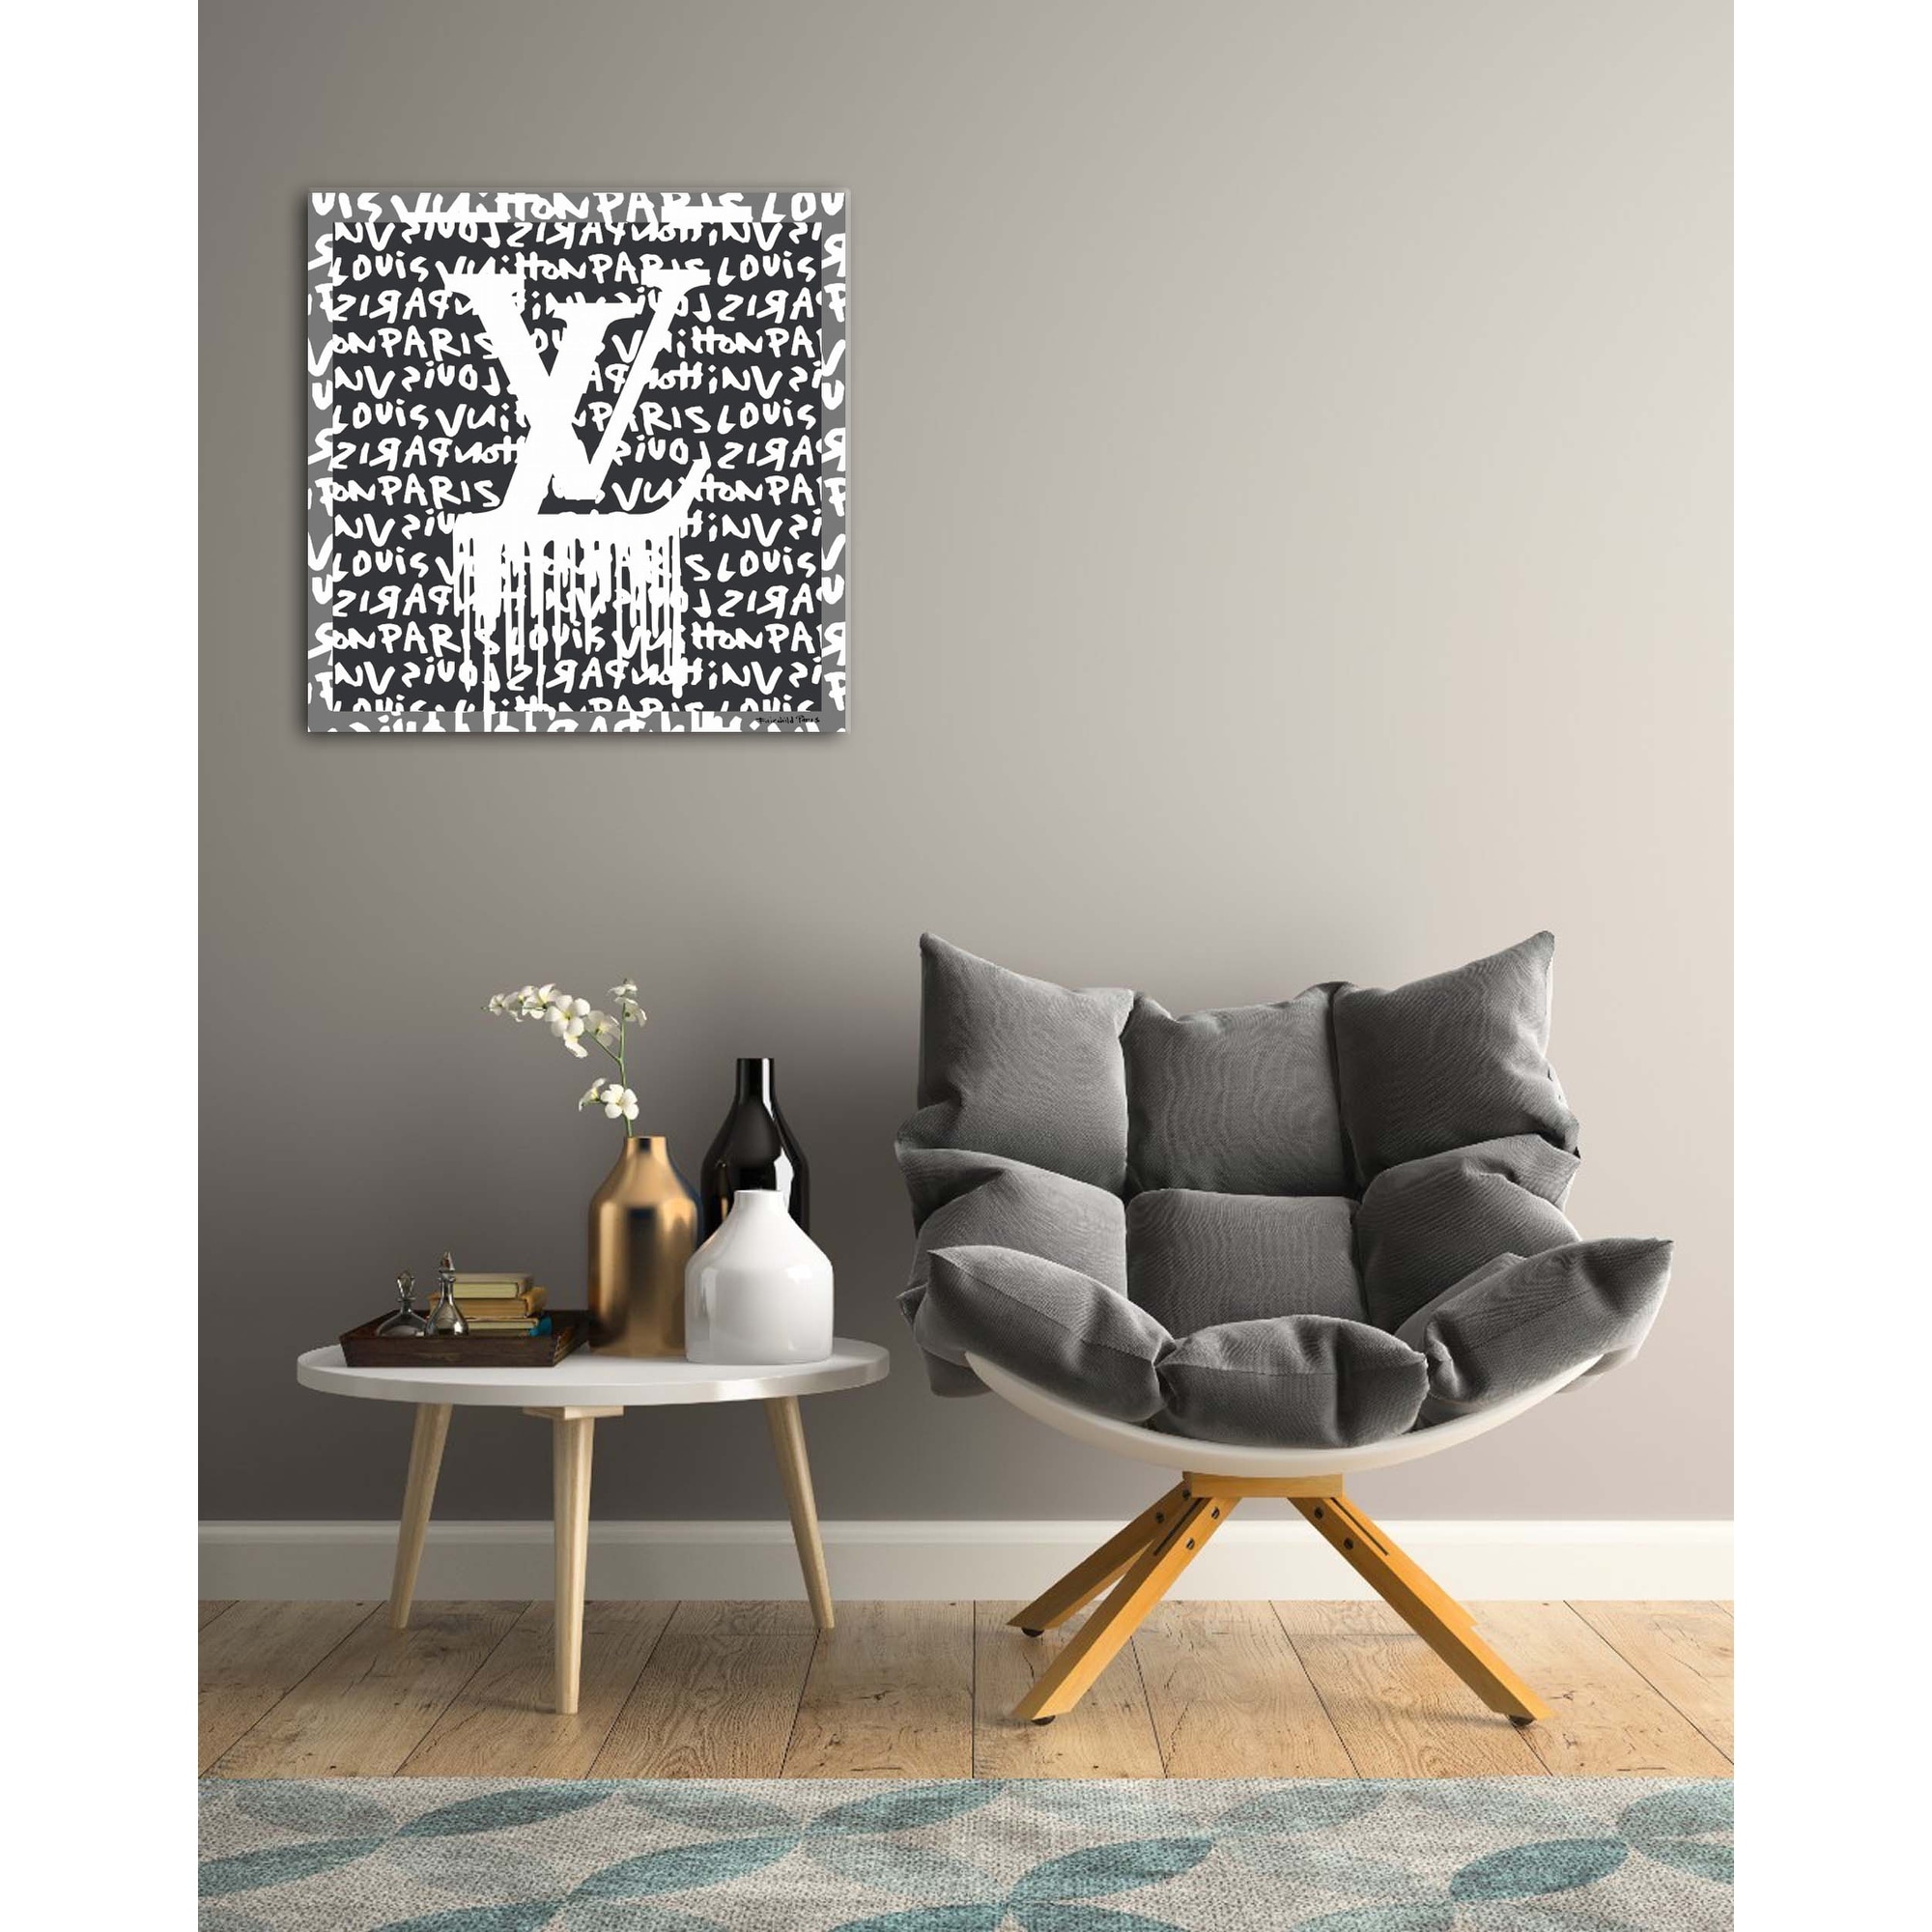 Fairchild Paris - Louis Vuitton Logo Drip - Canvas Wall Art 30 x 30 - On  Sale - Bed Bath & Beyond - 32627860